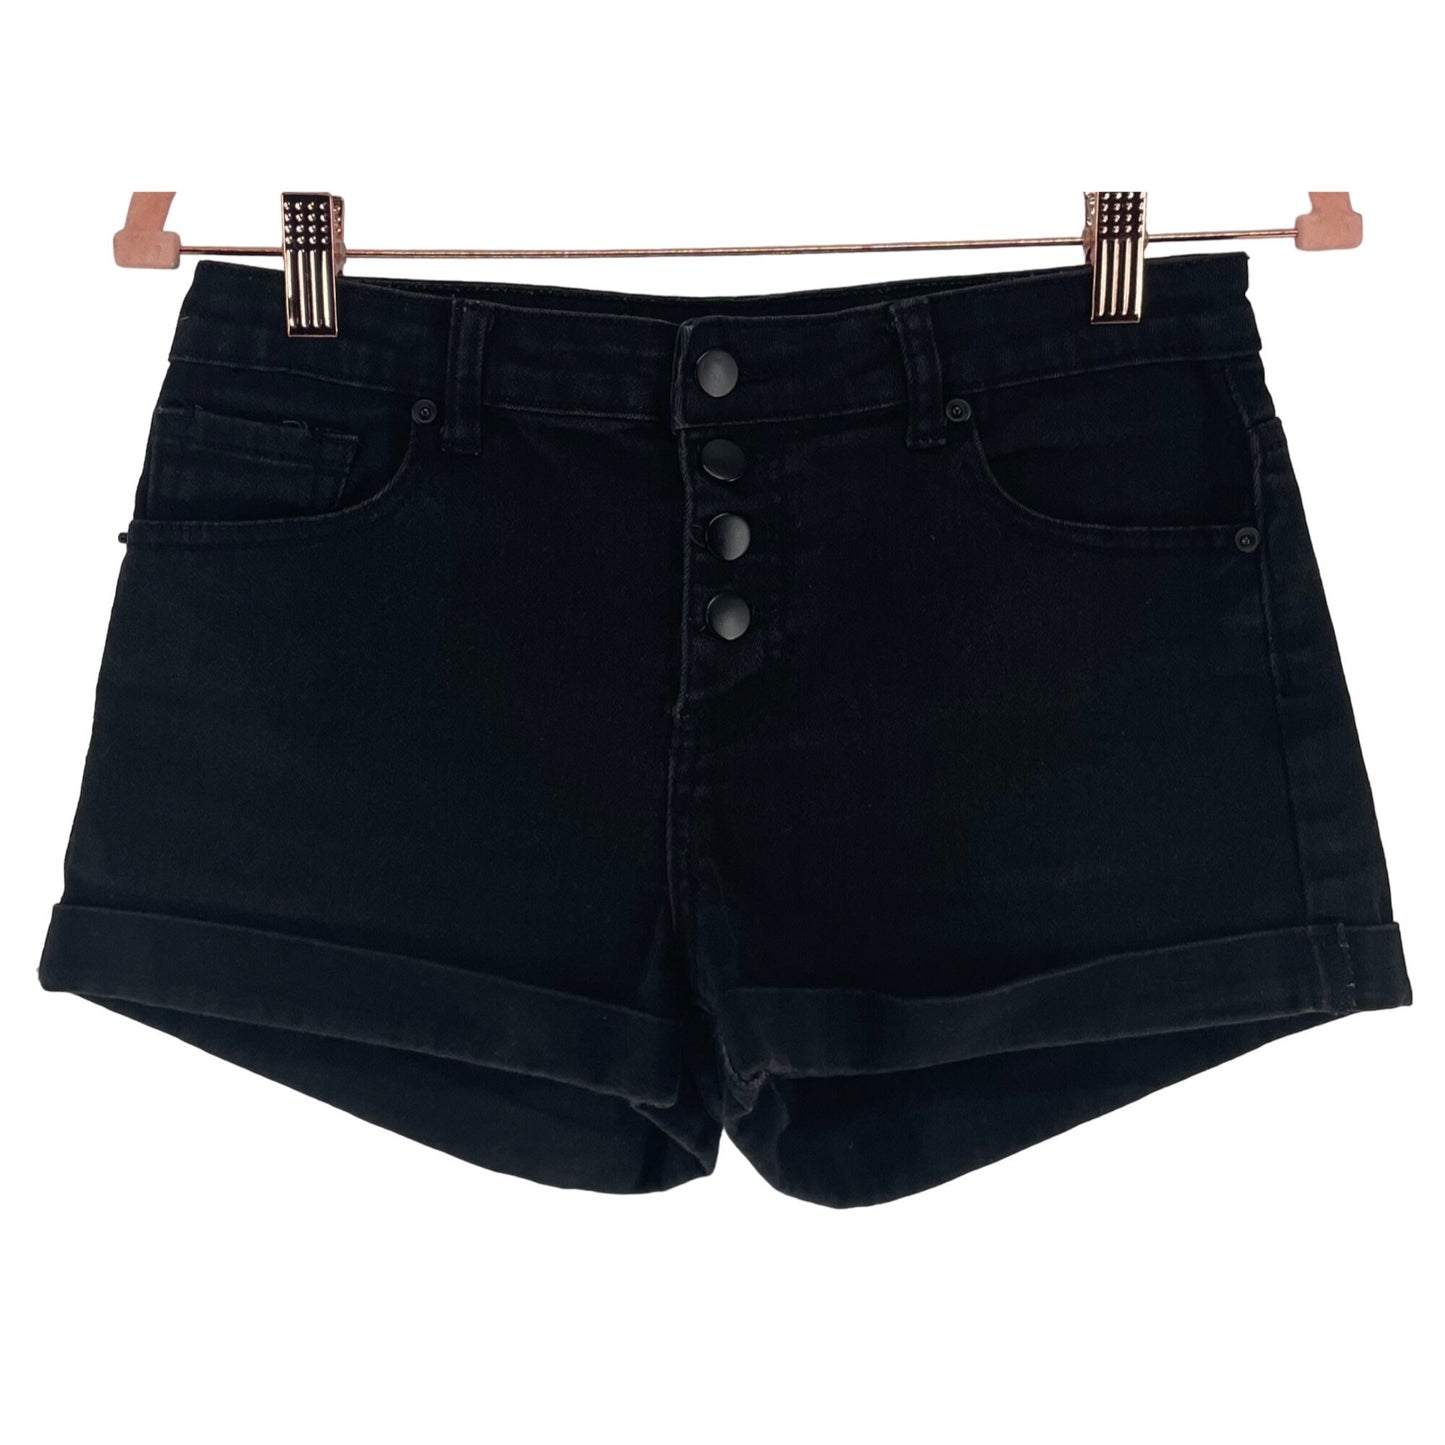 Forever 21 Women's Size 28 Black Button-Up Denim Shorts